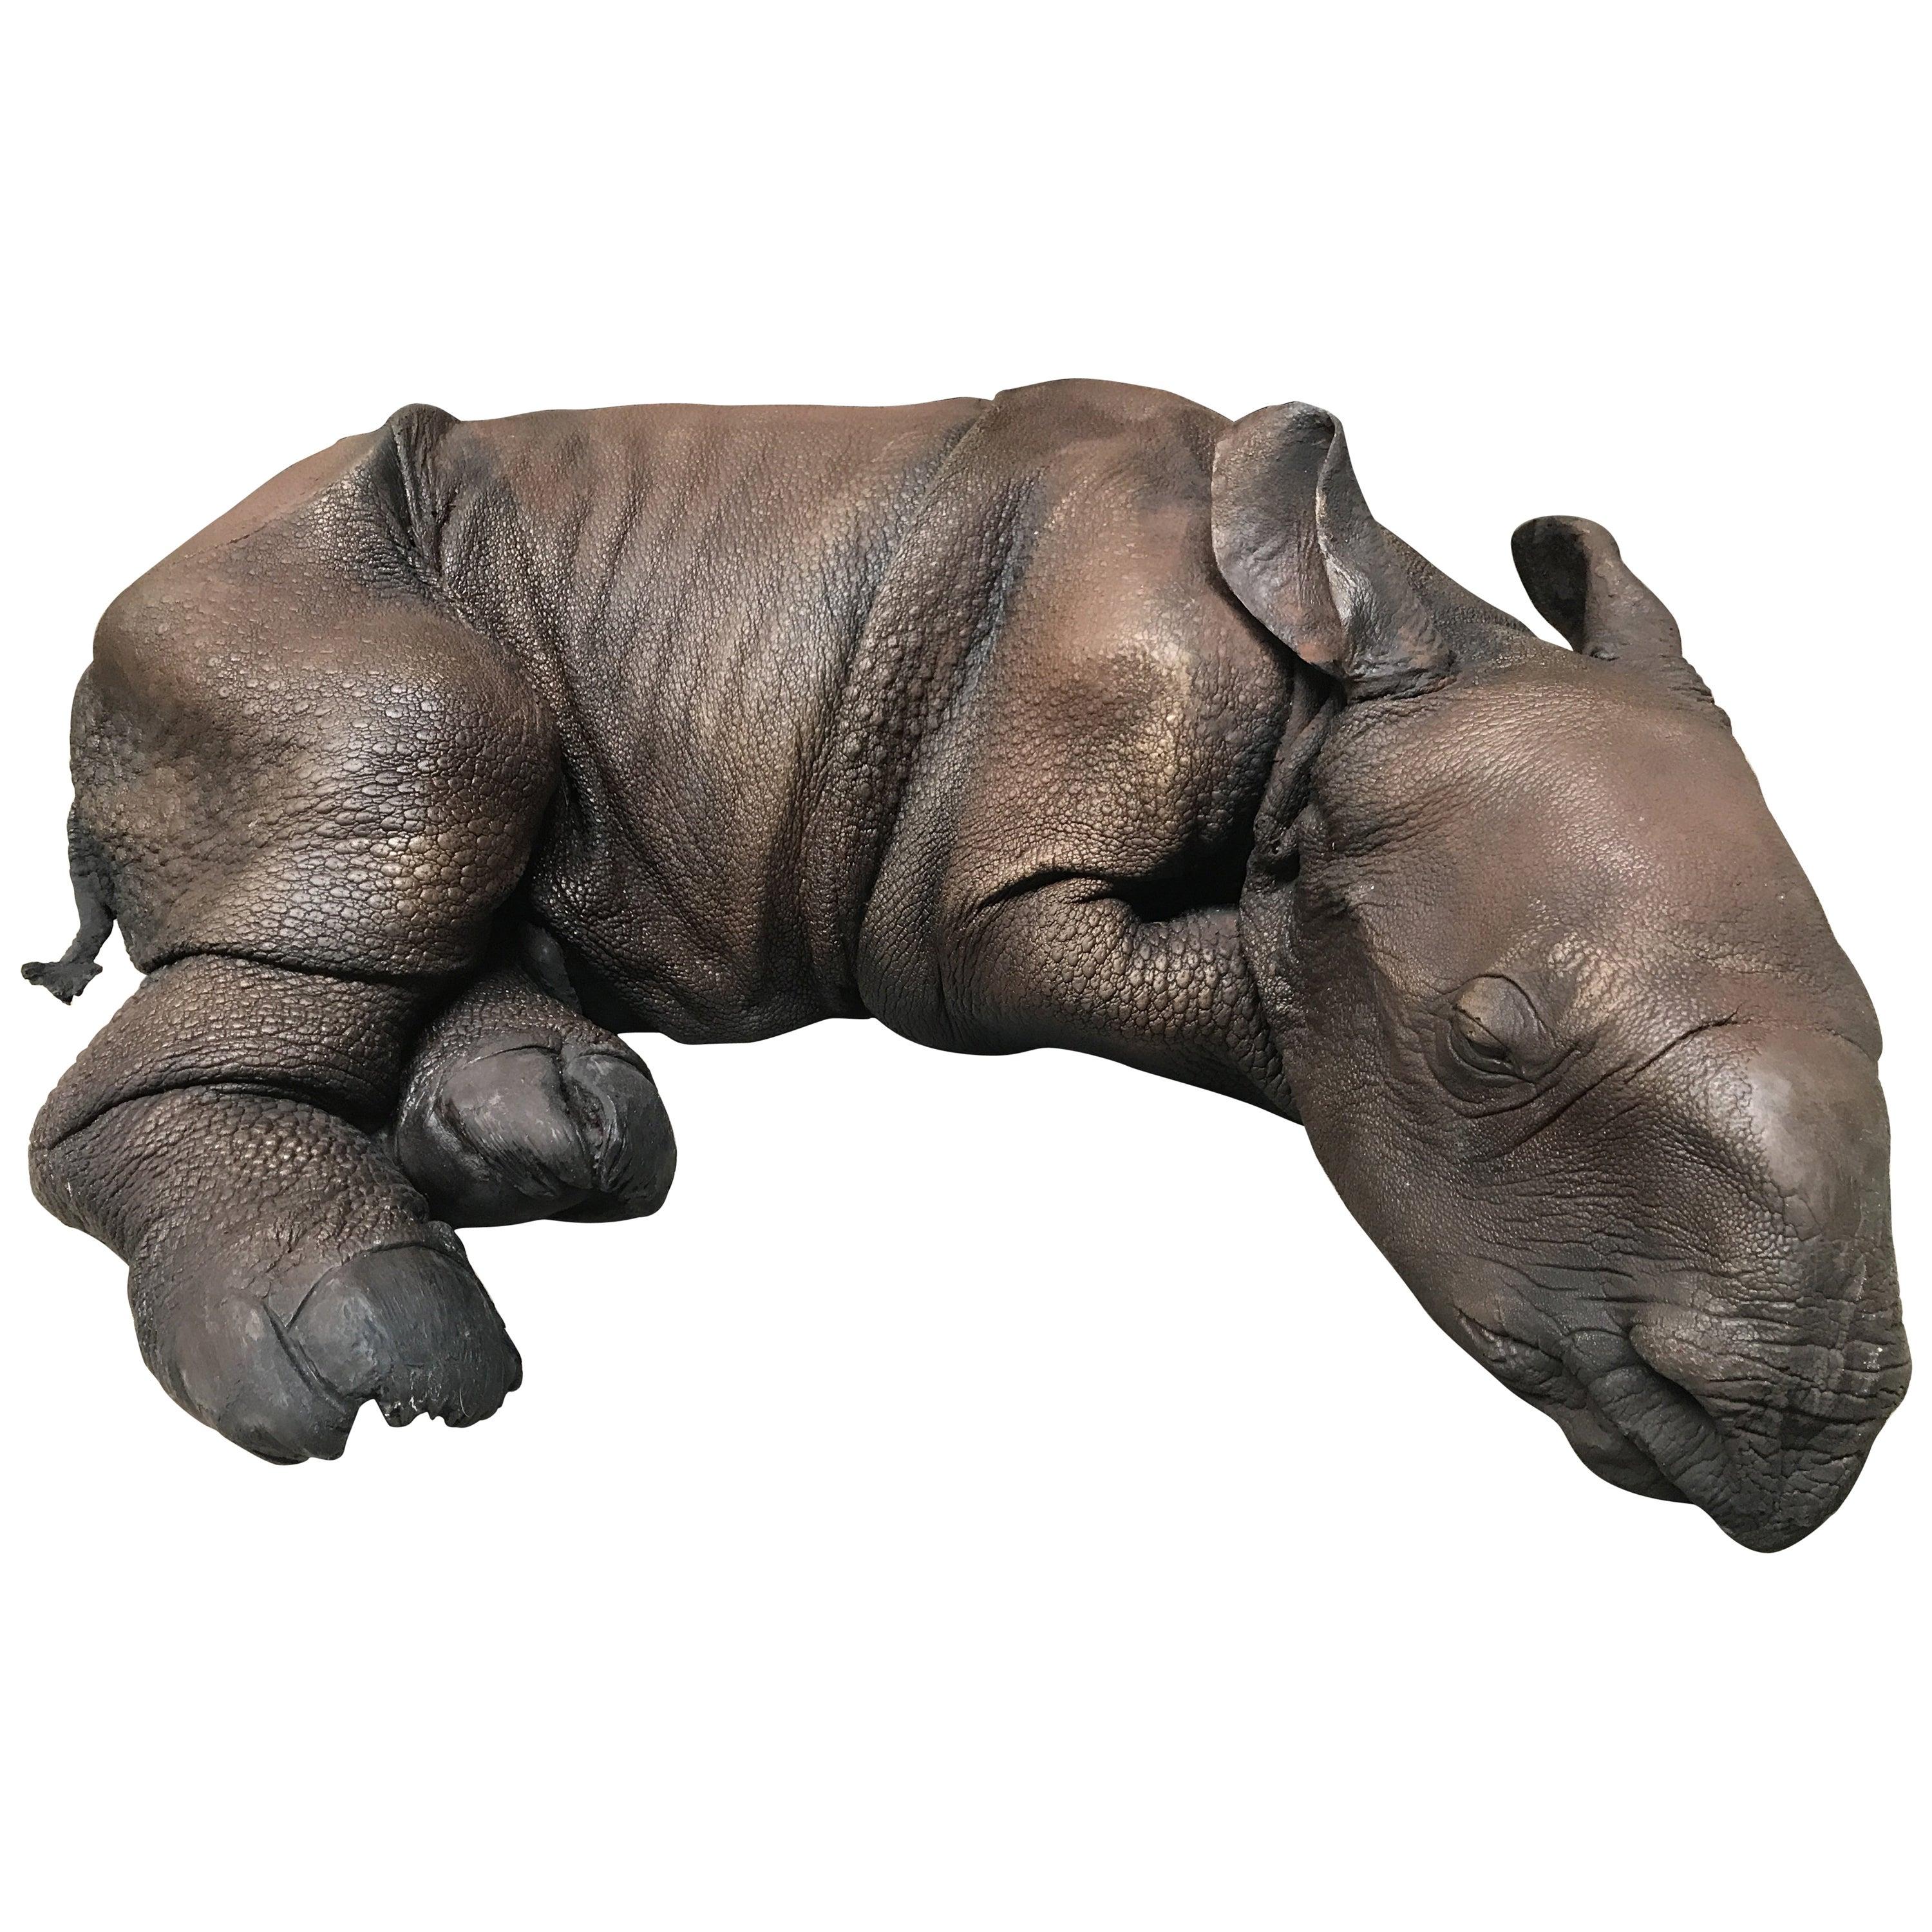 Lifelike Replica of a Rhino Calf For Sale